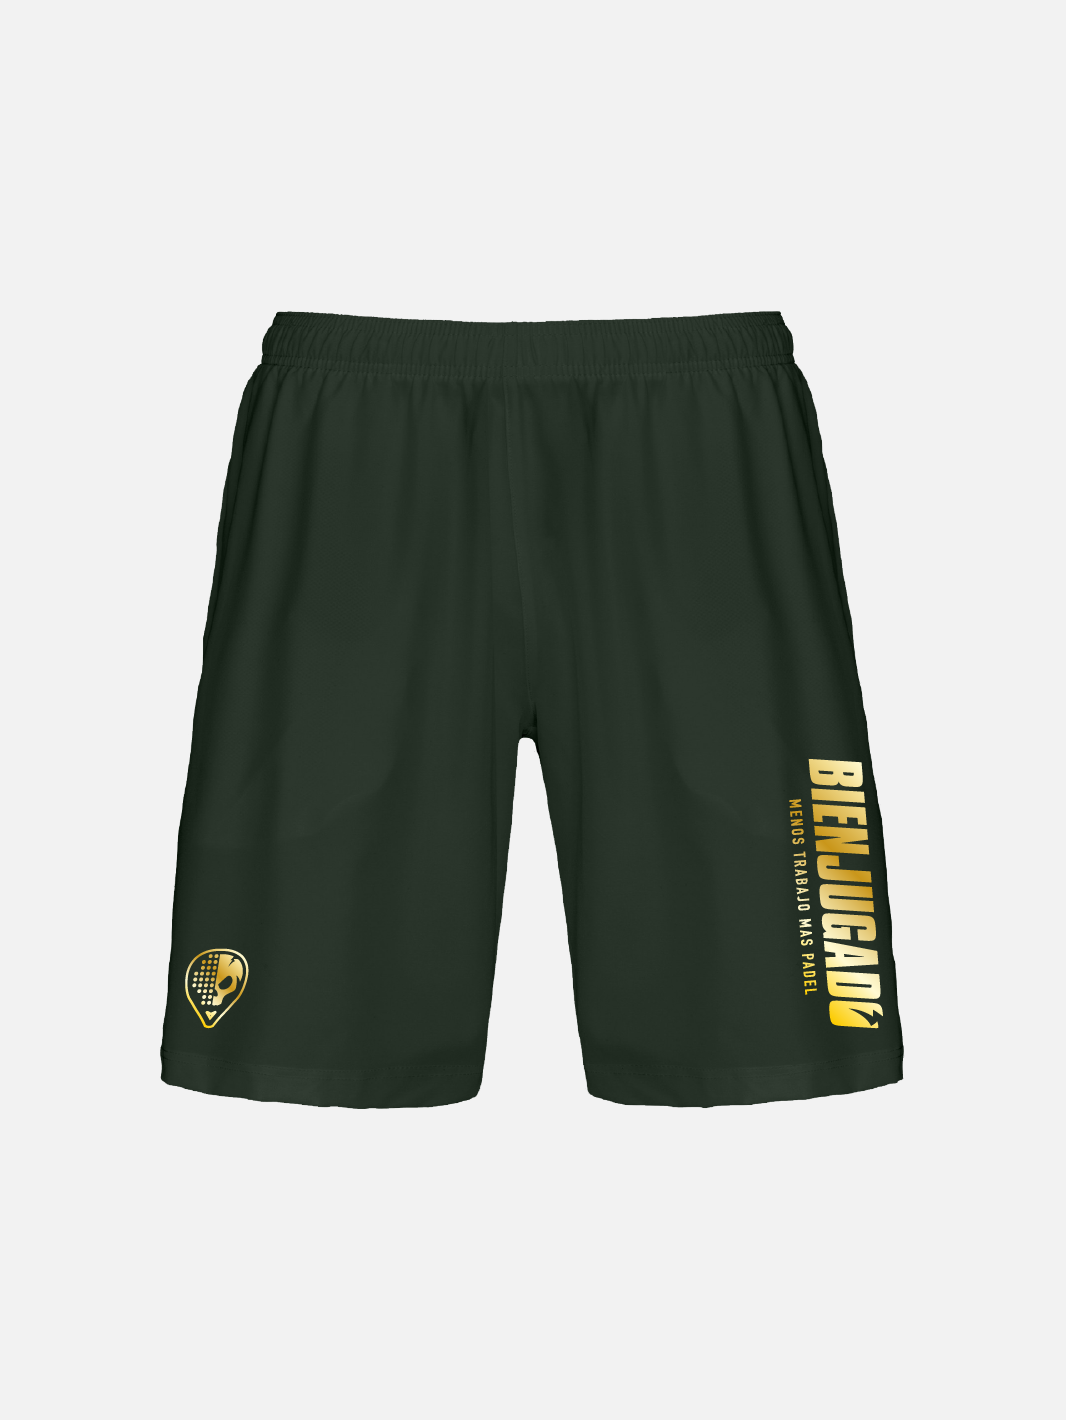 Men's Shorts - Military Green